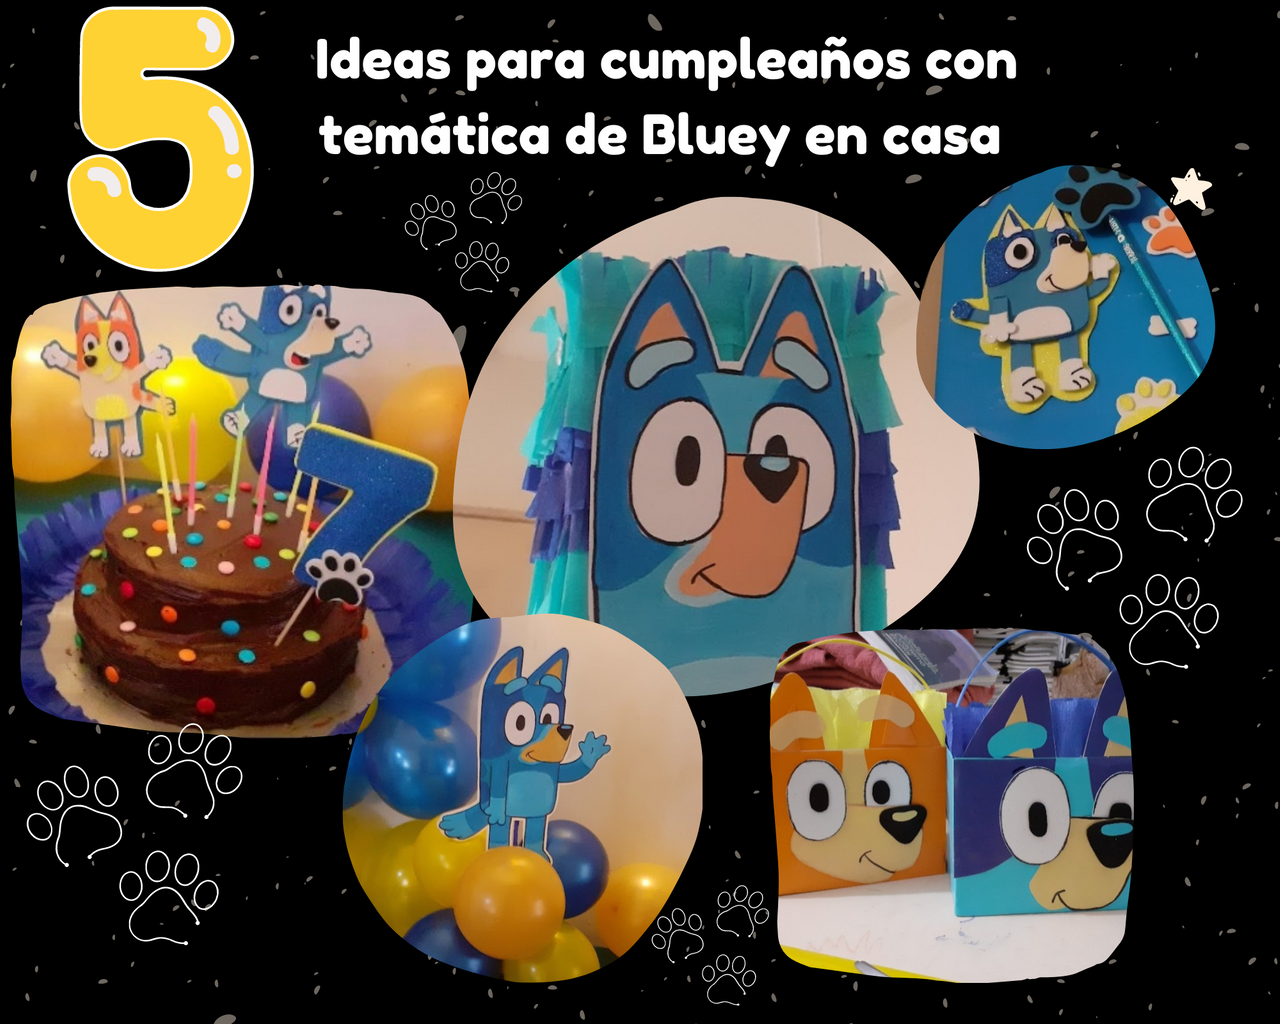 Esp-Eng 5 ideas para cumpleaños con temática de Bluey en casa